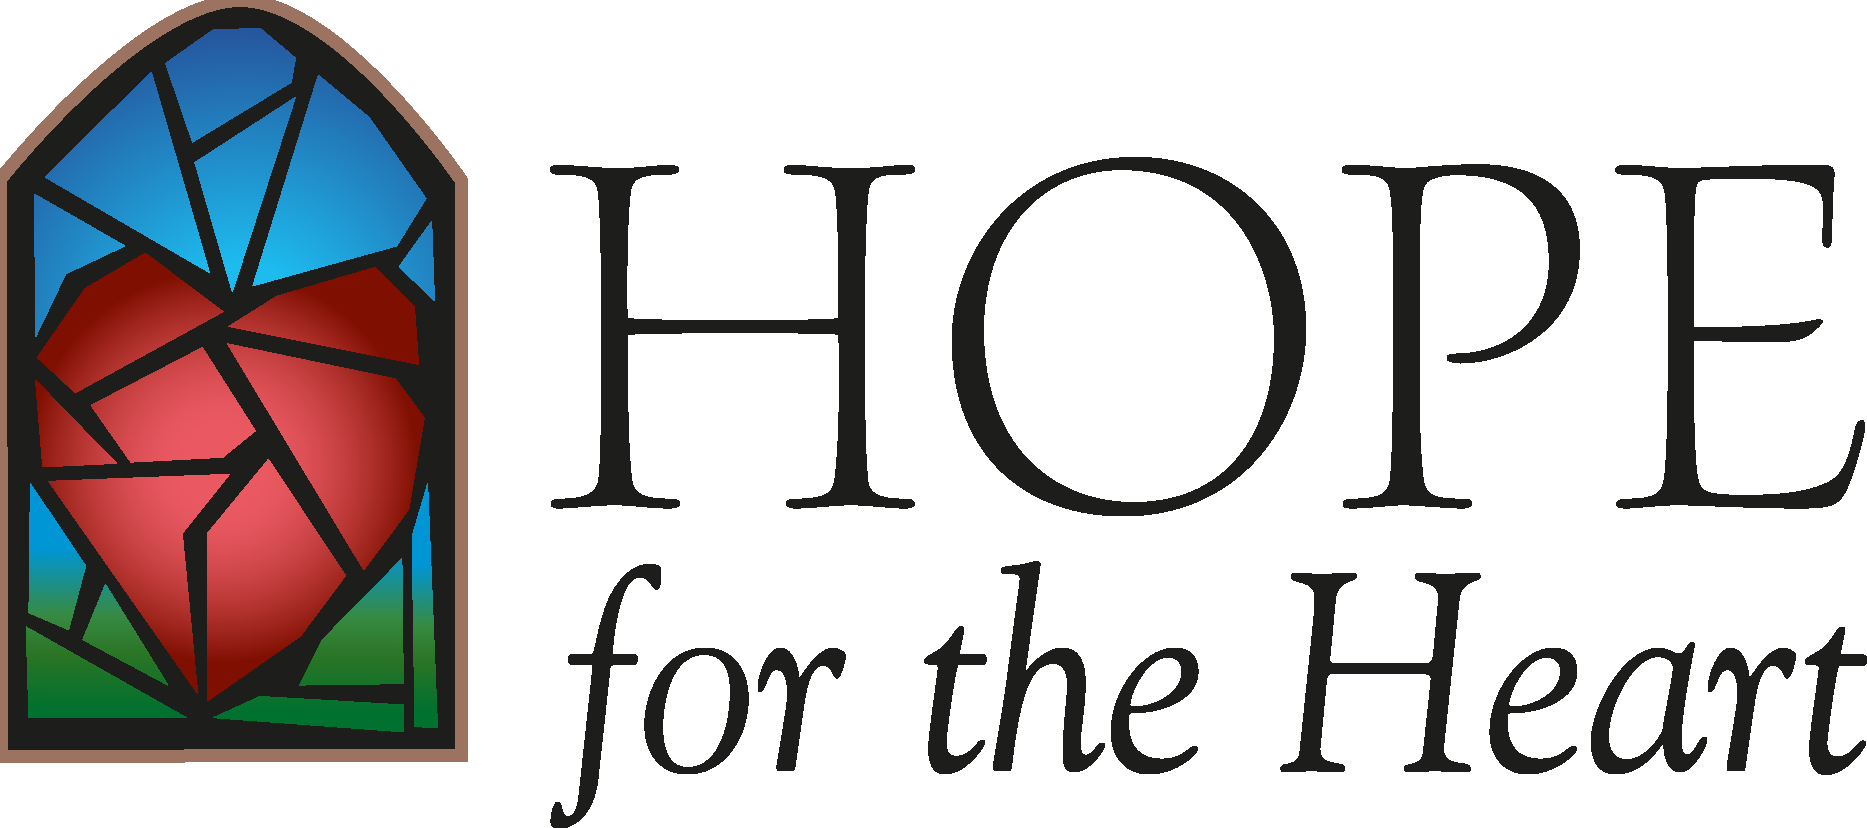 Hope for the Heart Logo Vector